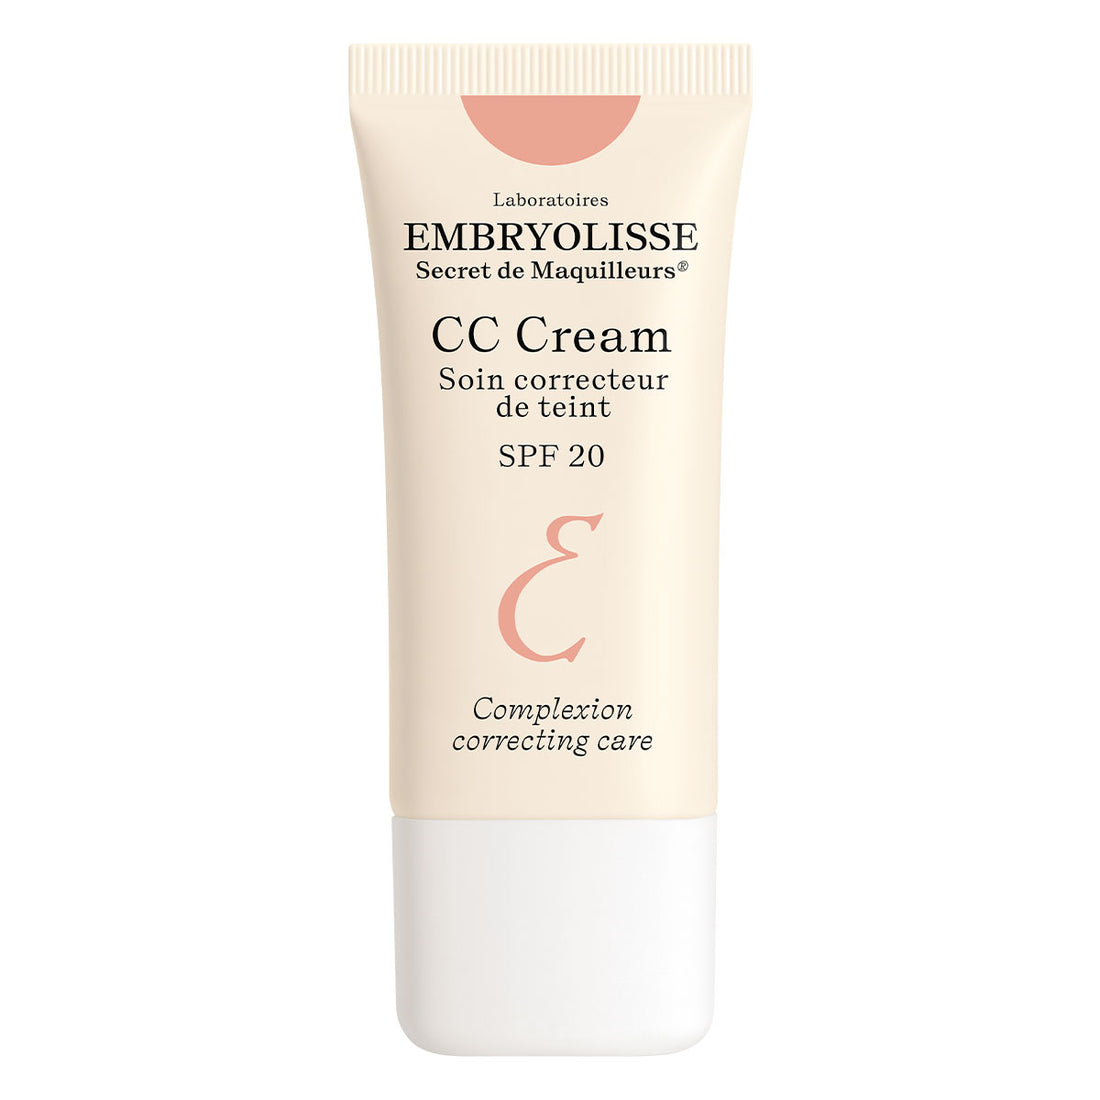 CC Cream Complexion Correcting Care 30ml